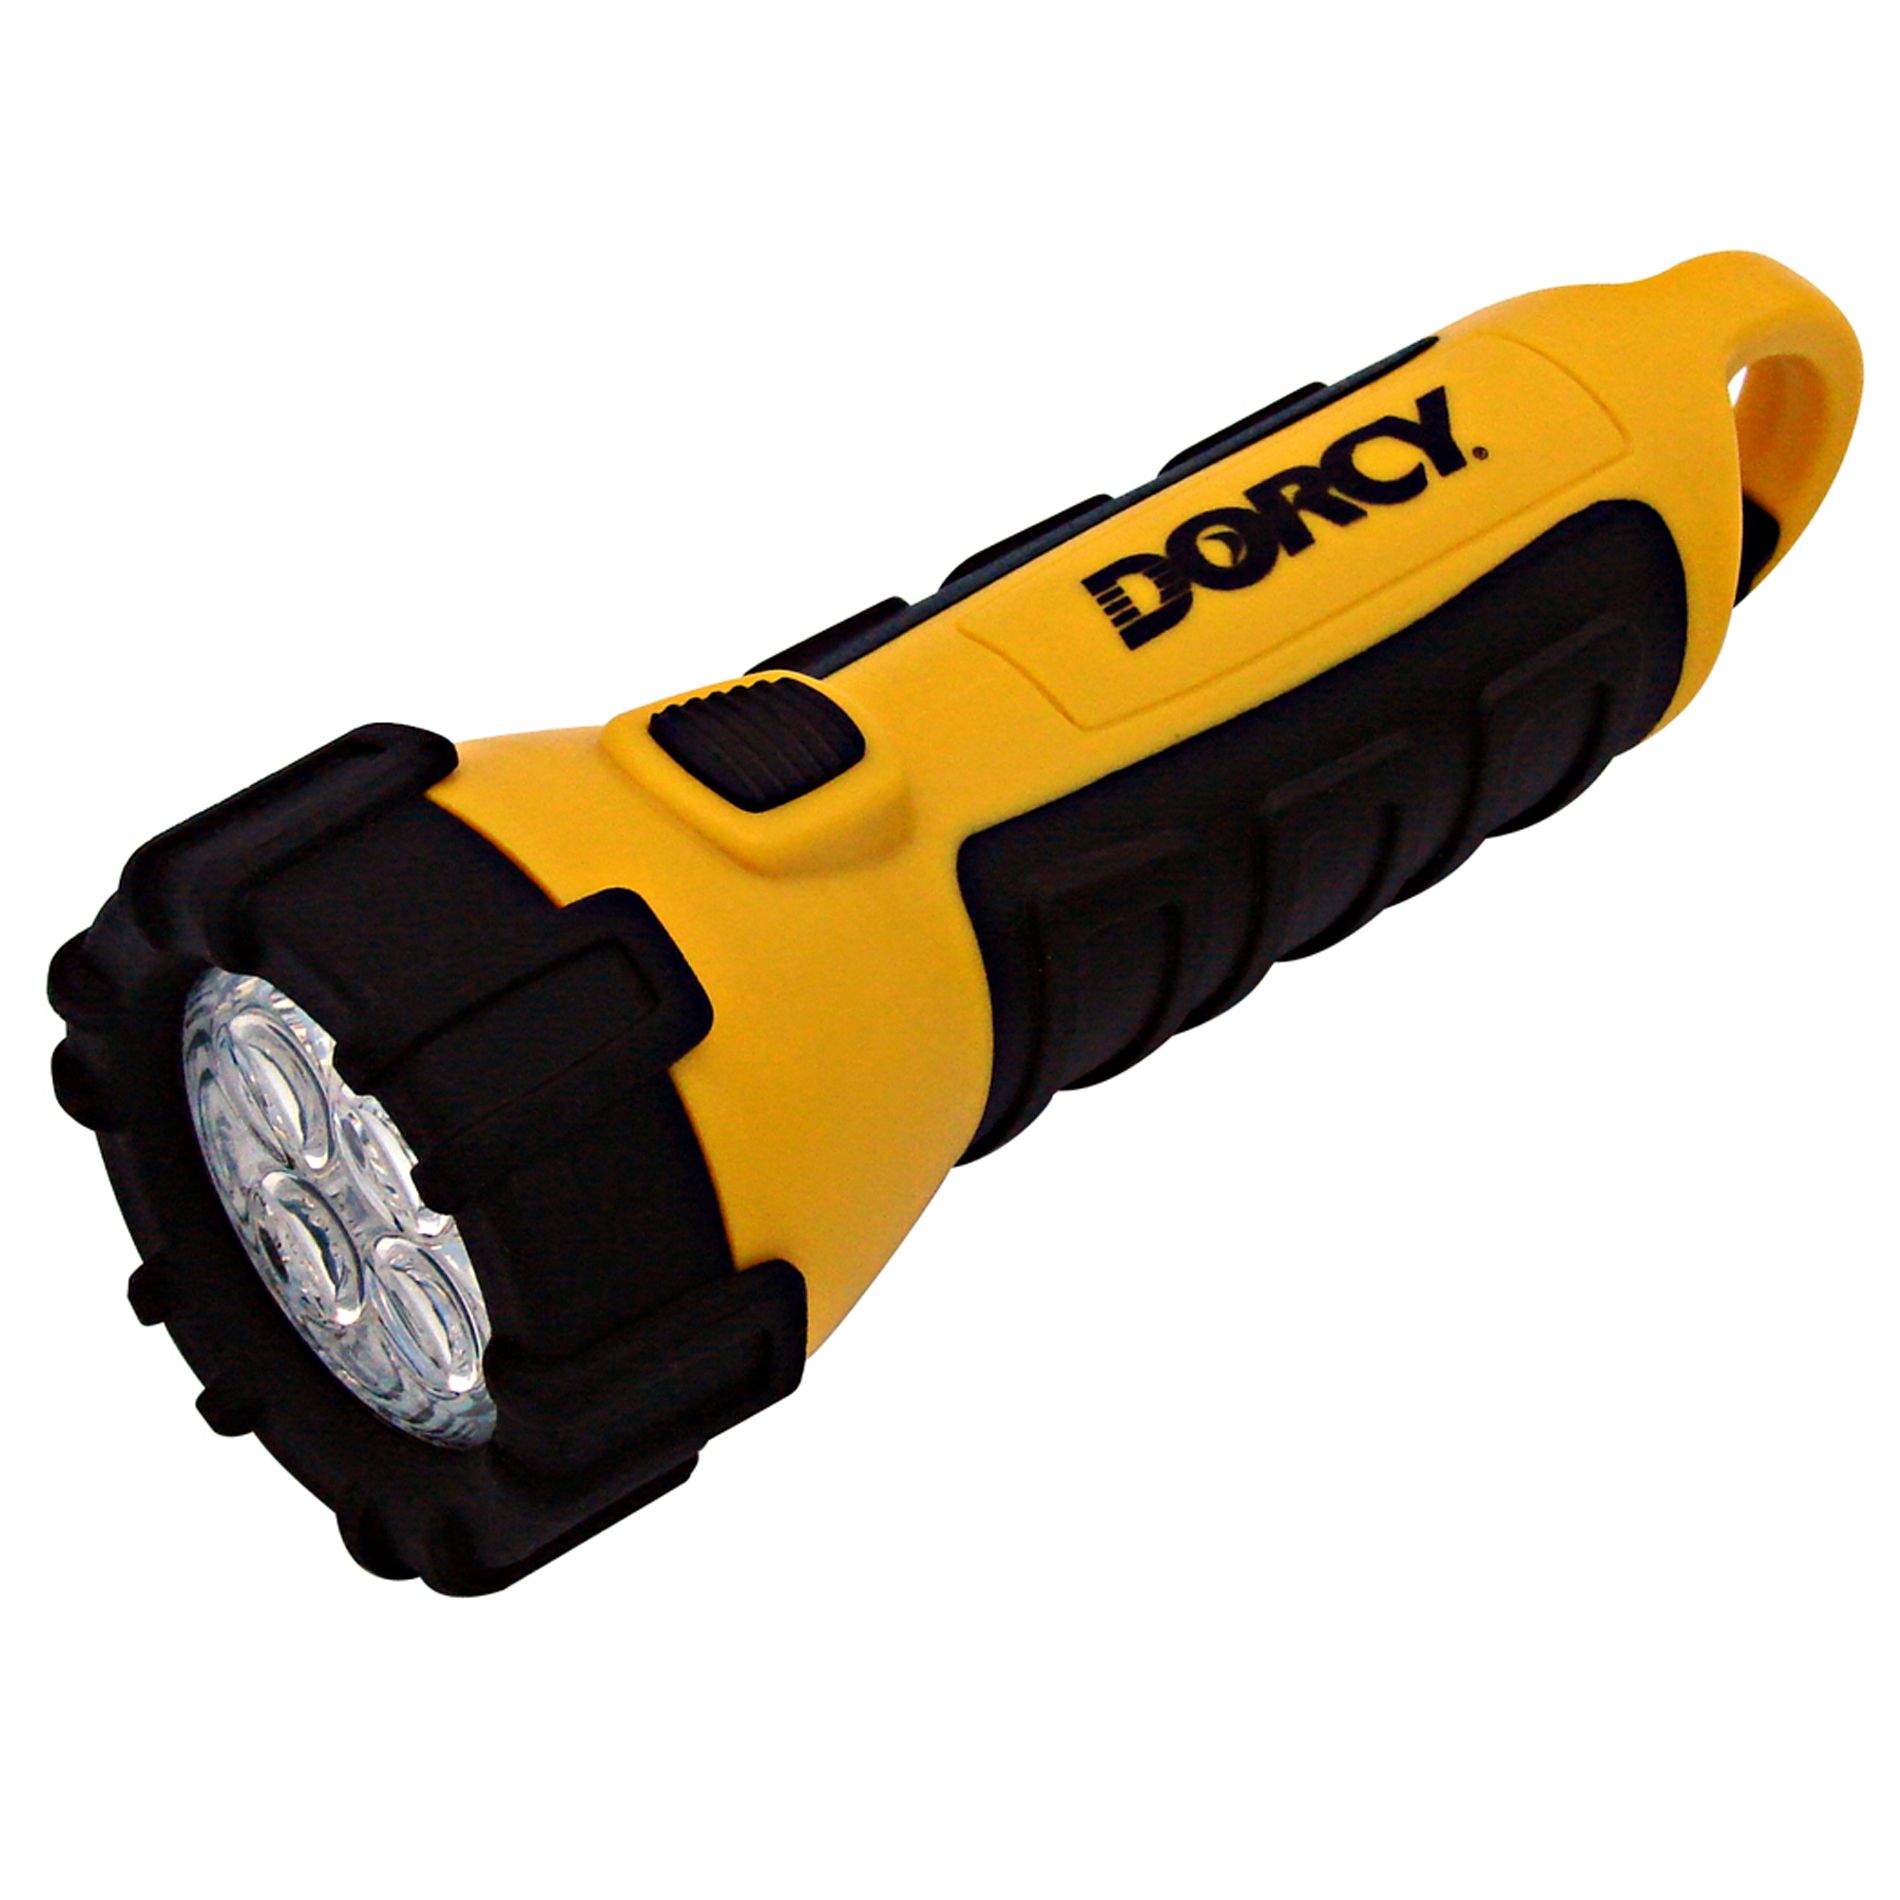 Dorcy 4 LED Carabineer Waterproof Flashlight